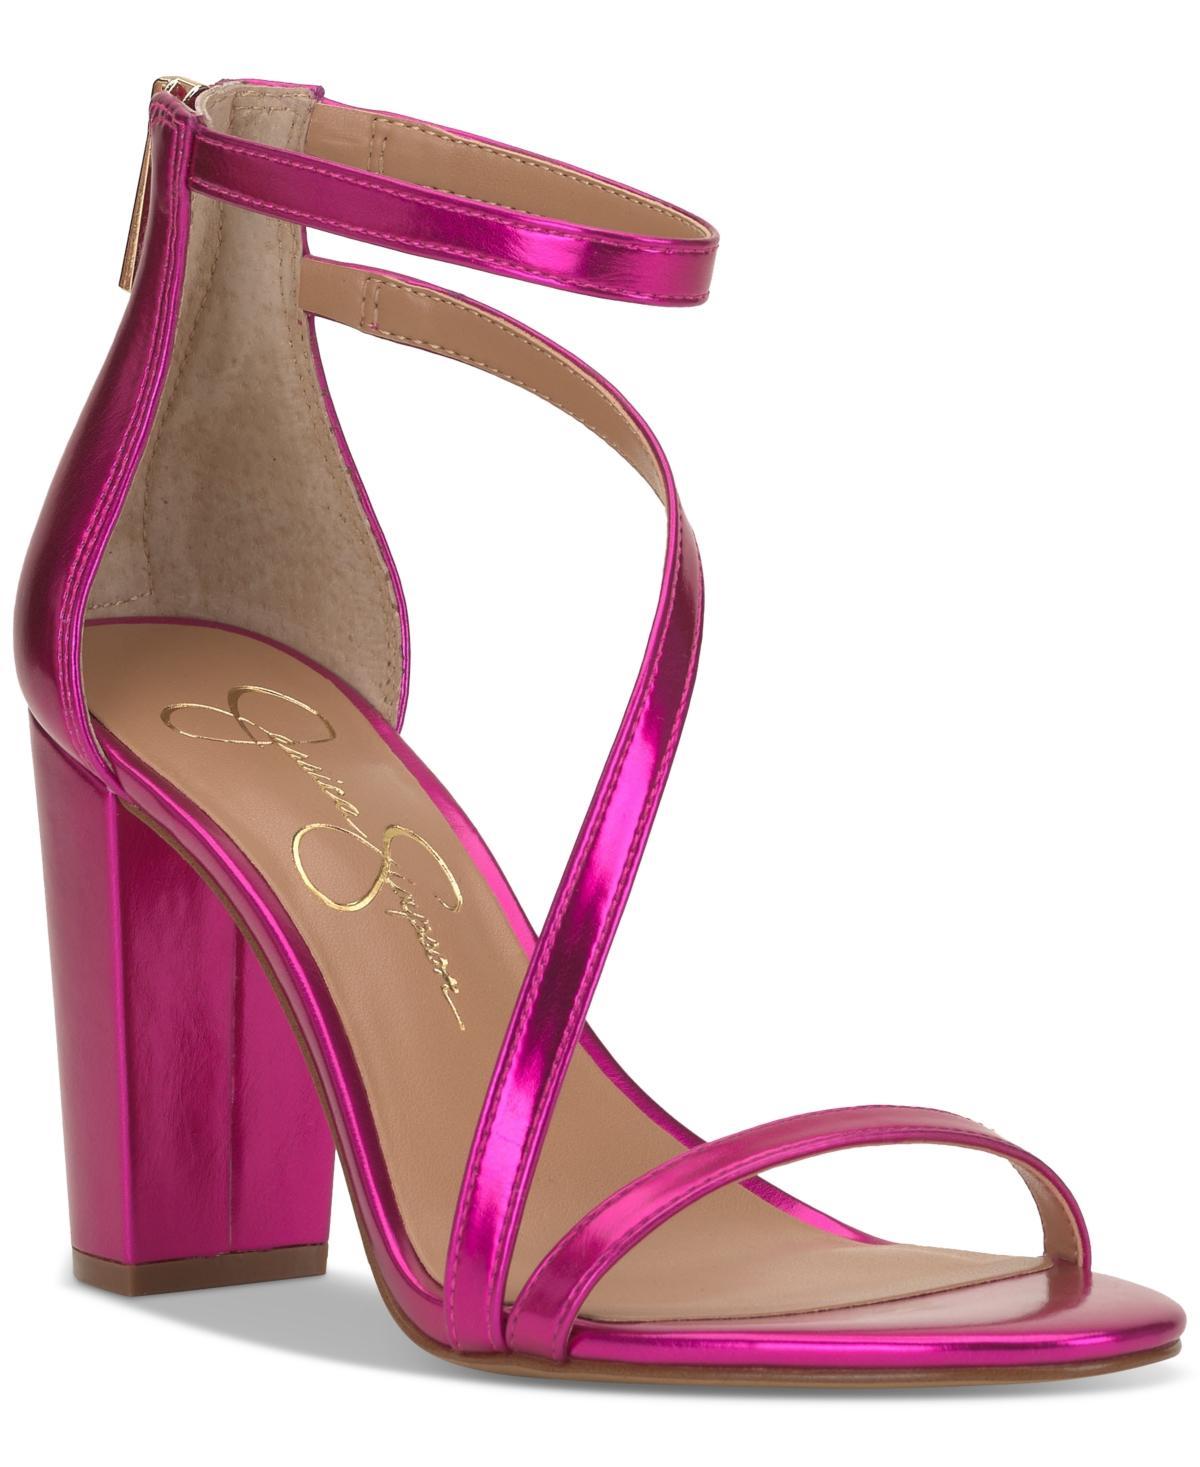 Jessica Simpson Sloyan Ankle Strap Sandal Product Image